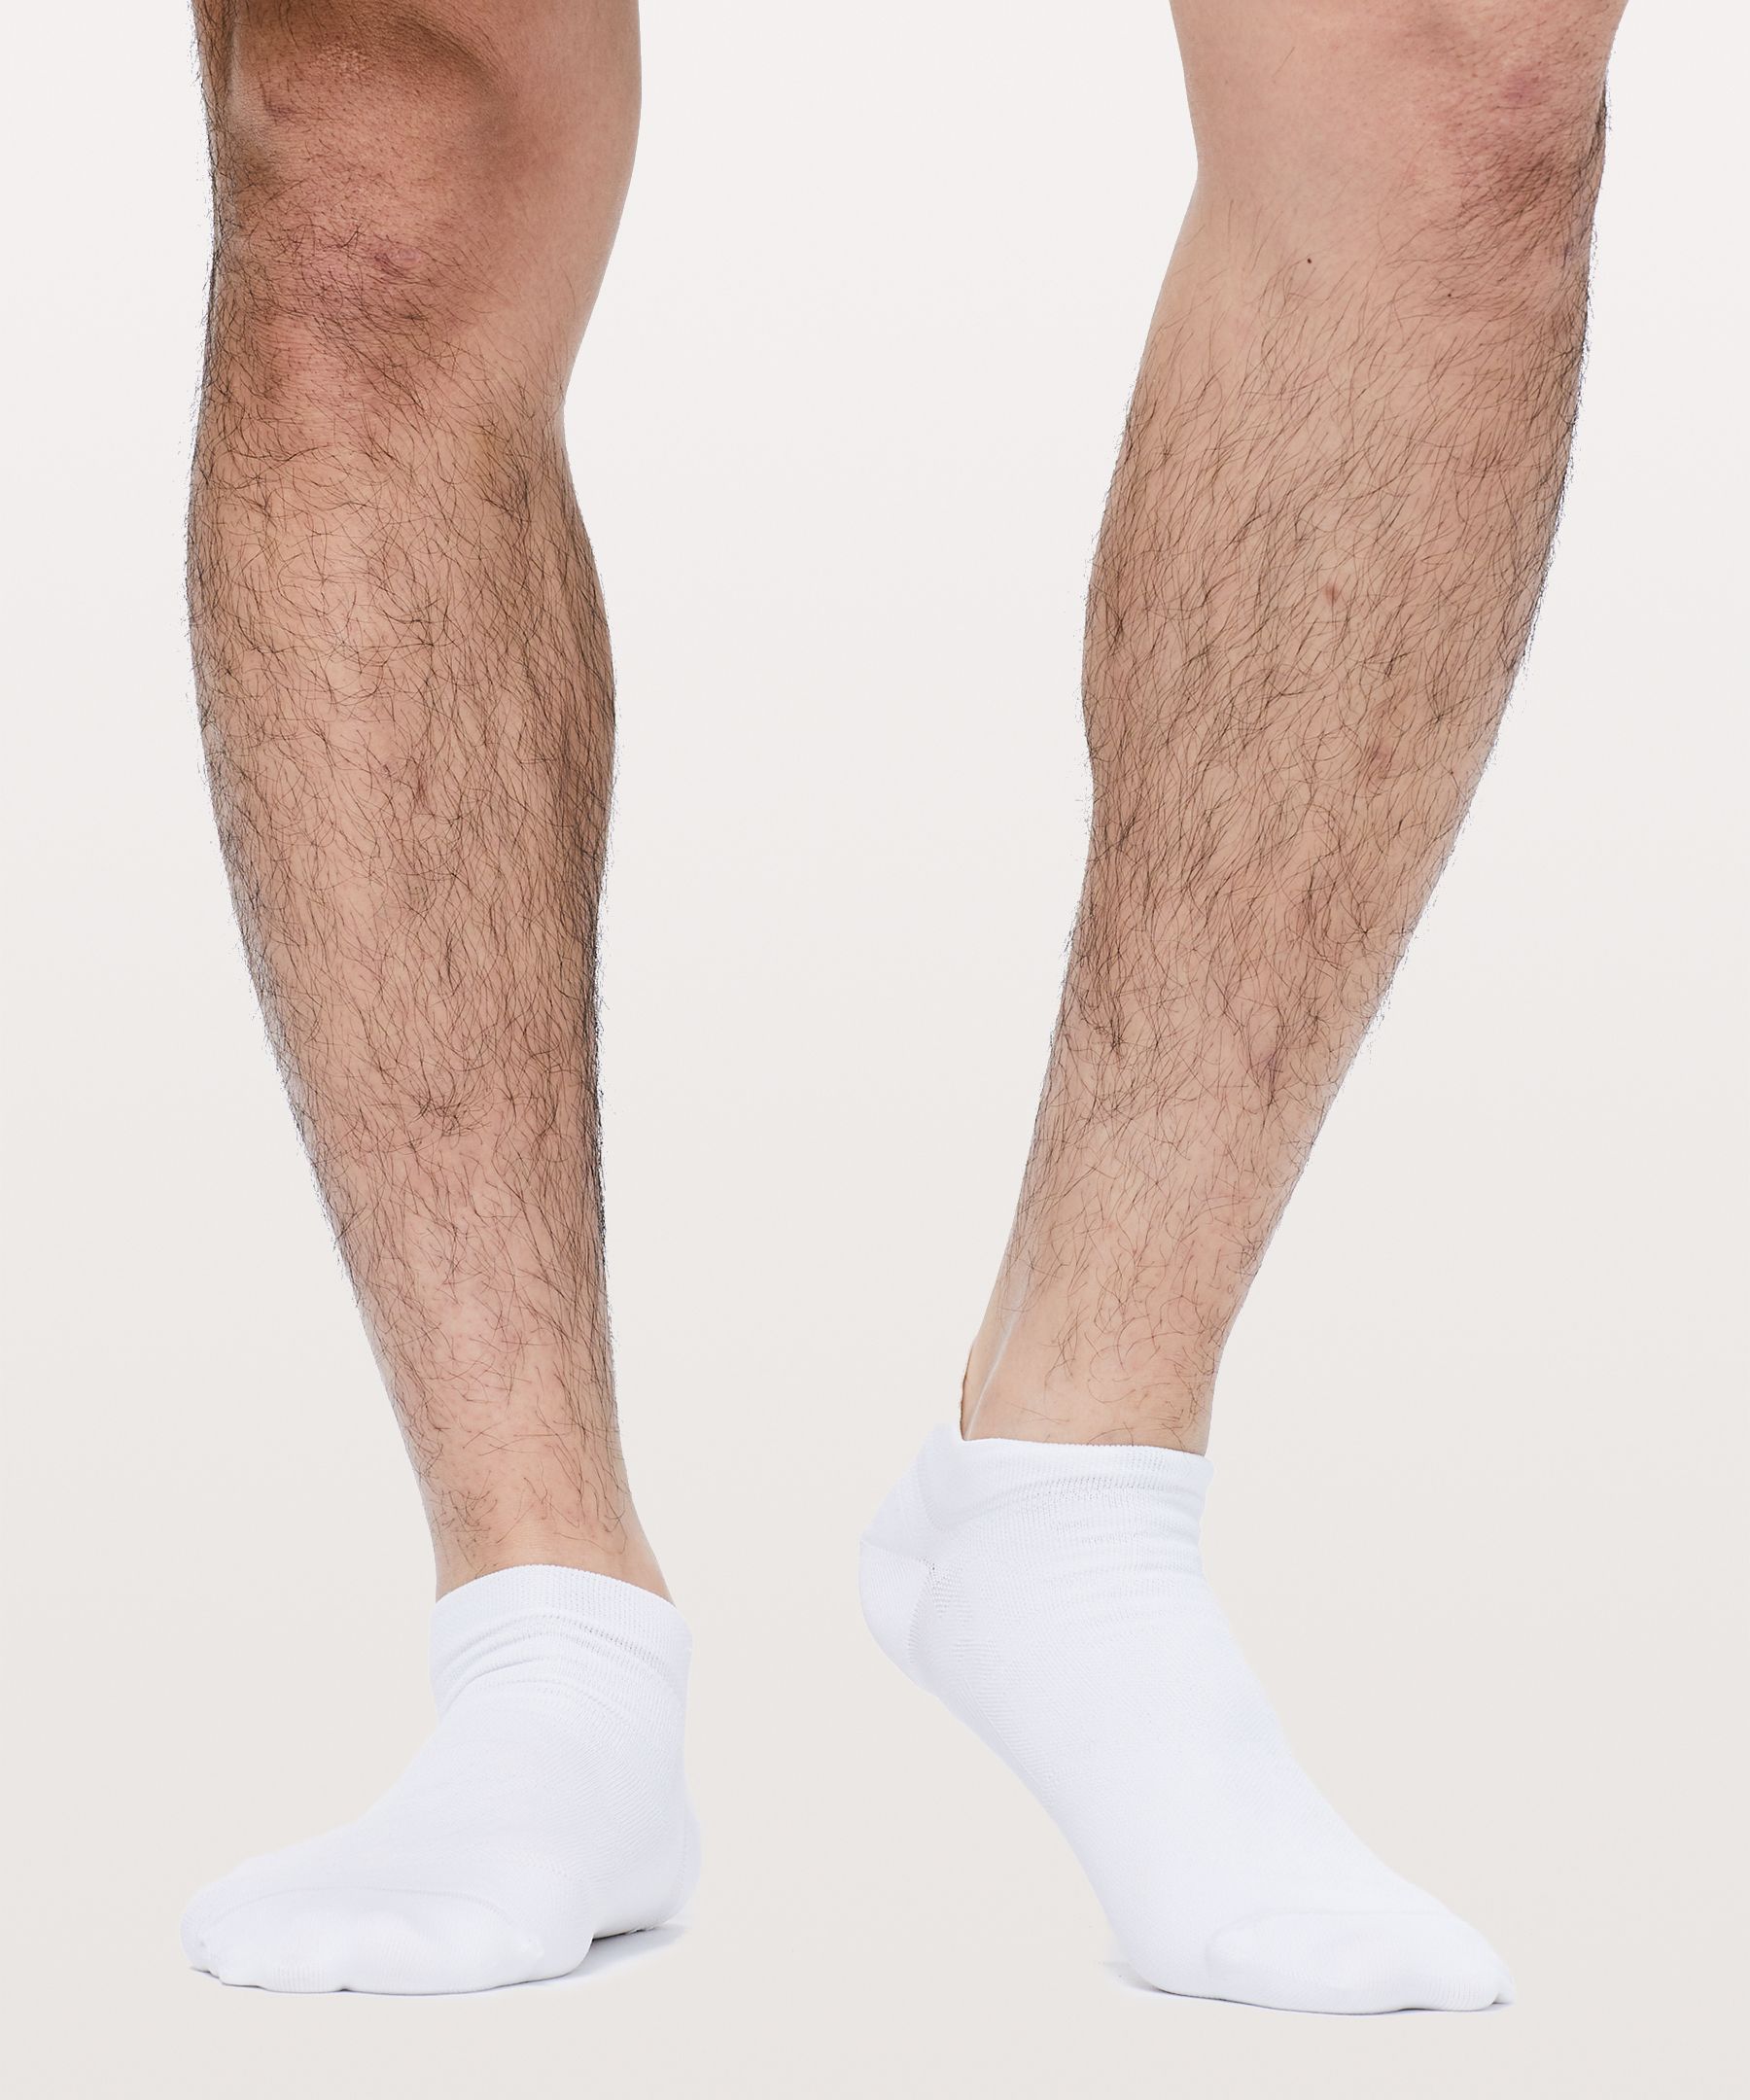 lululemon socks mens